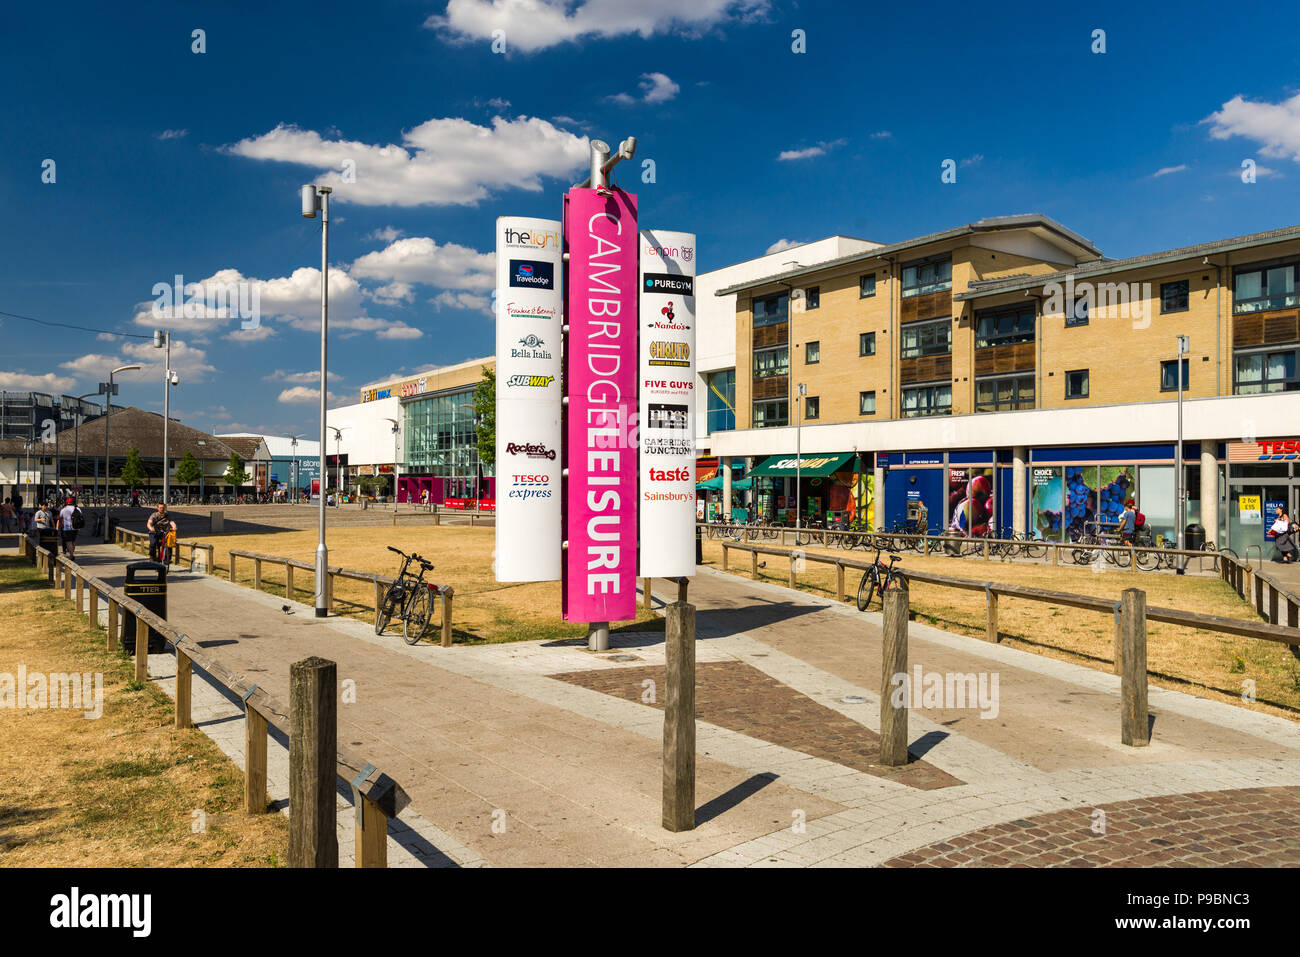 Cambridge Leisure Park on a sunny Summer day, UK Stock Photo: 212314595